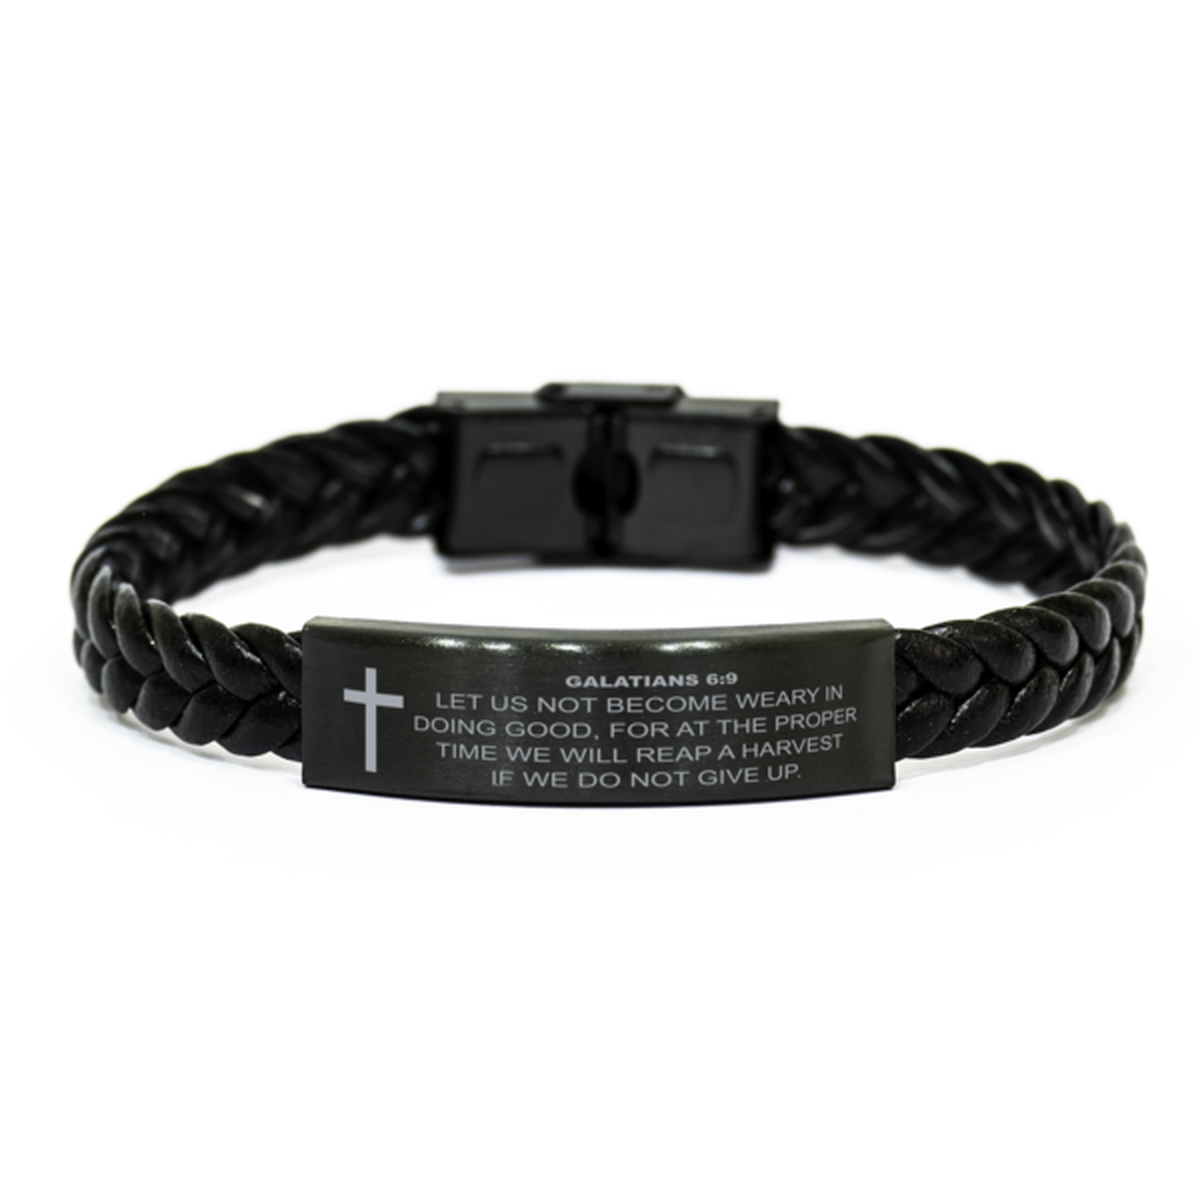 Galatians 6:9 Bracelet, Let Us Not Become Weary In Doing Good, Bible Verse Bracelet, Christian Bracelet, Braided Leather Bracelet, Easter Gift